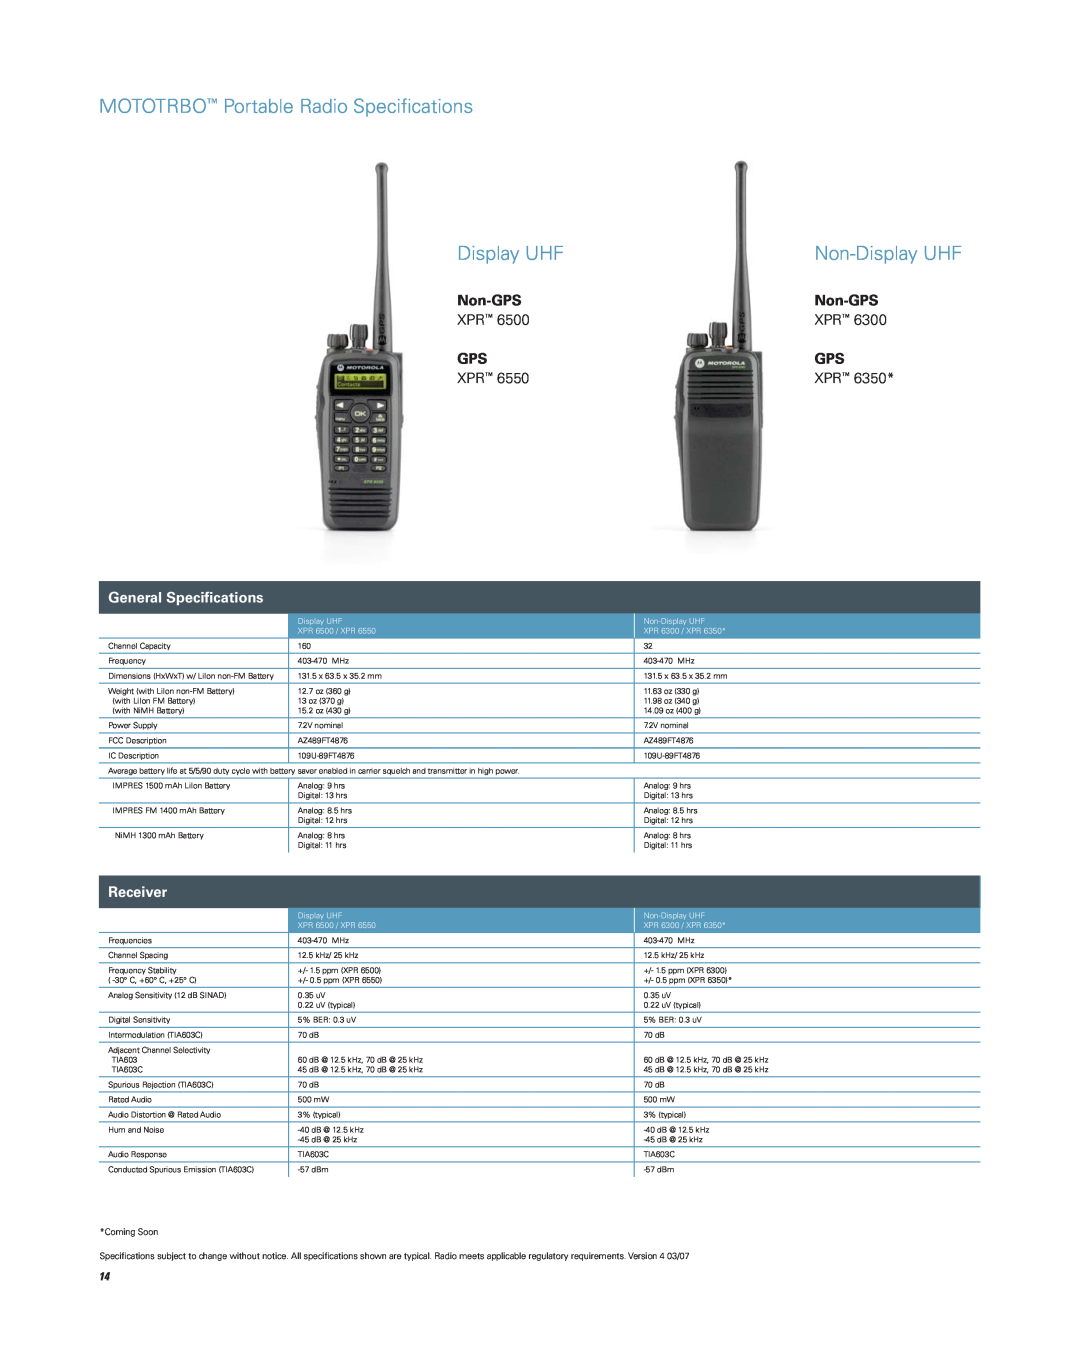 Motorola Professional Digital Two-Way Radio System MOTOTRBO Portable Radio Speciﬁcations, Non-Display UHF, Non-GPS 